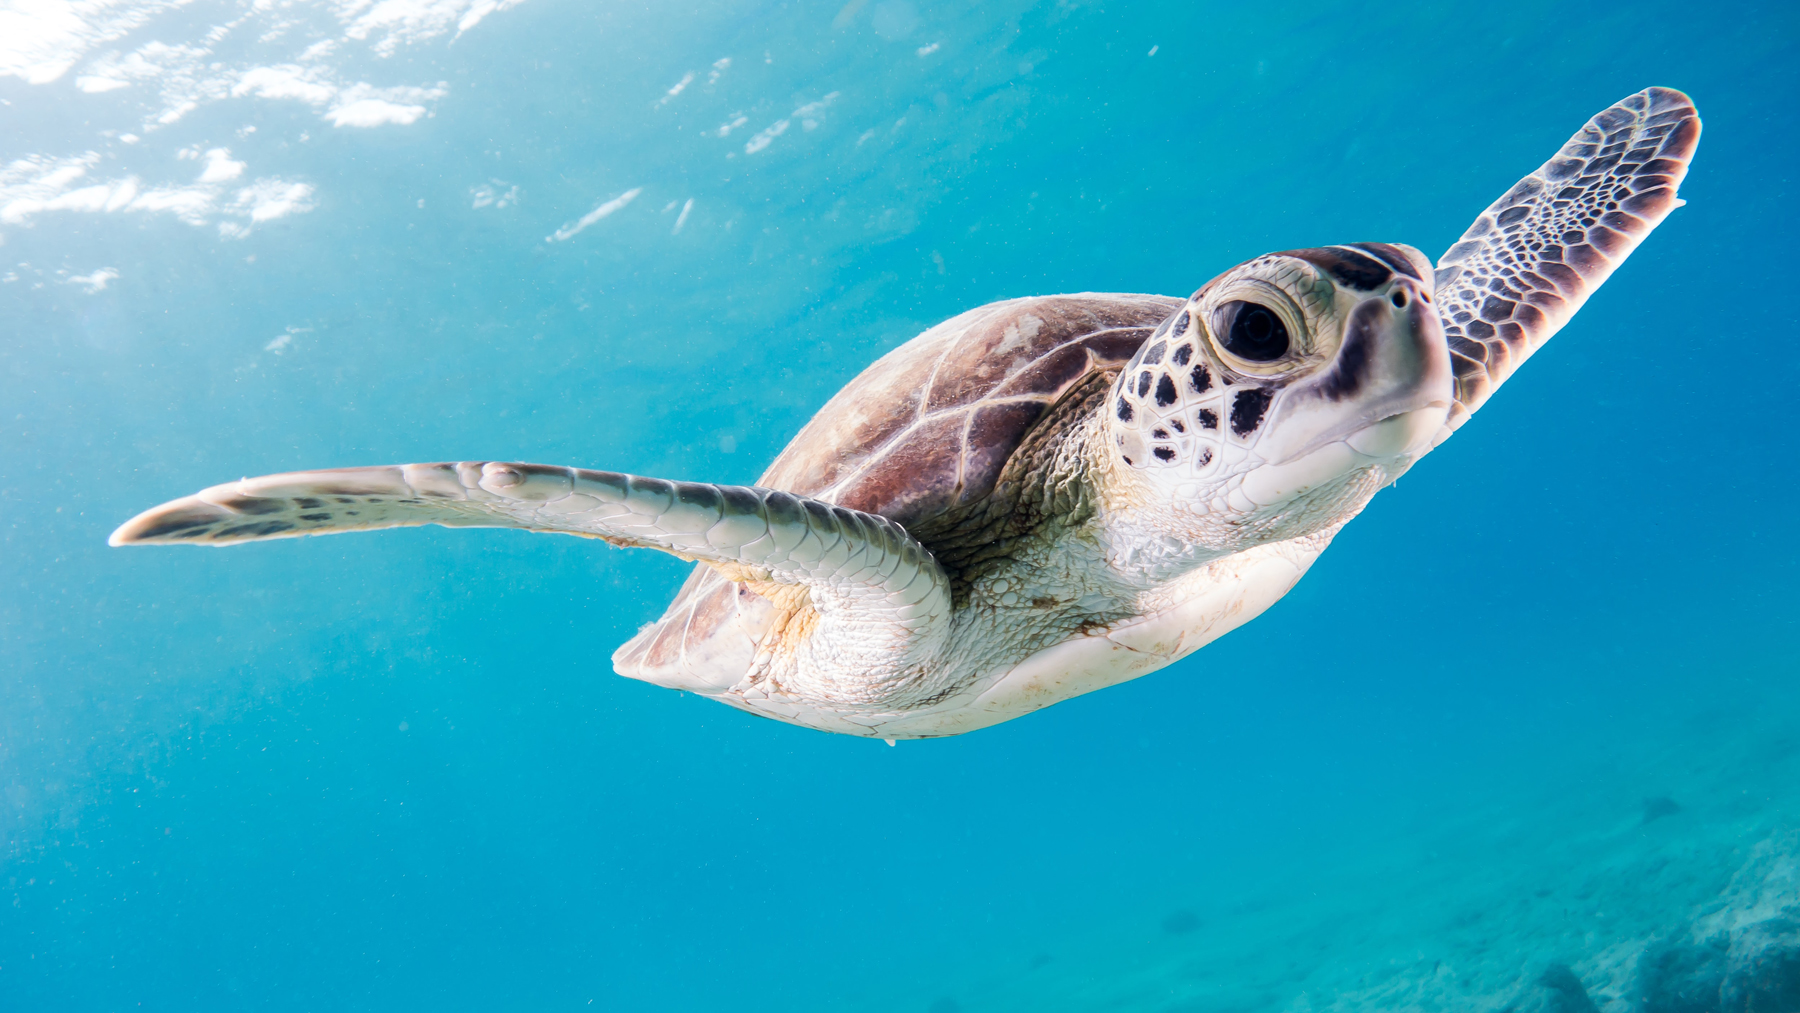 Sea turtle underwater in the Caribbean (source: Kris Mikael Krister, Unsplash)